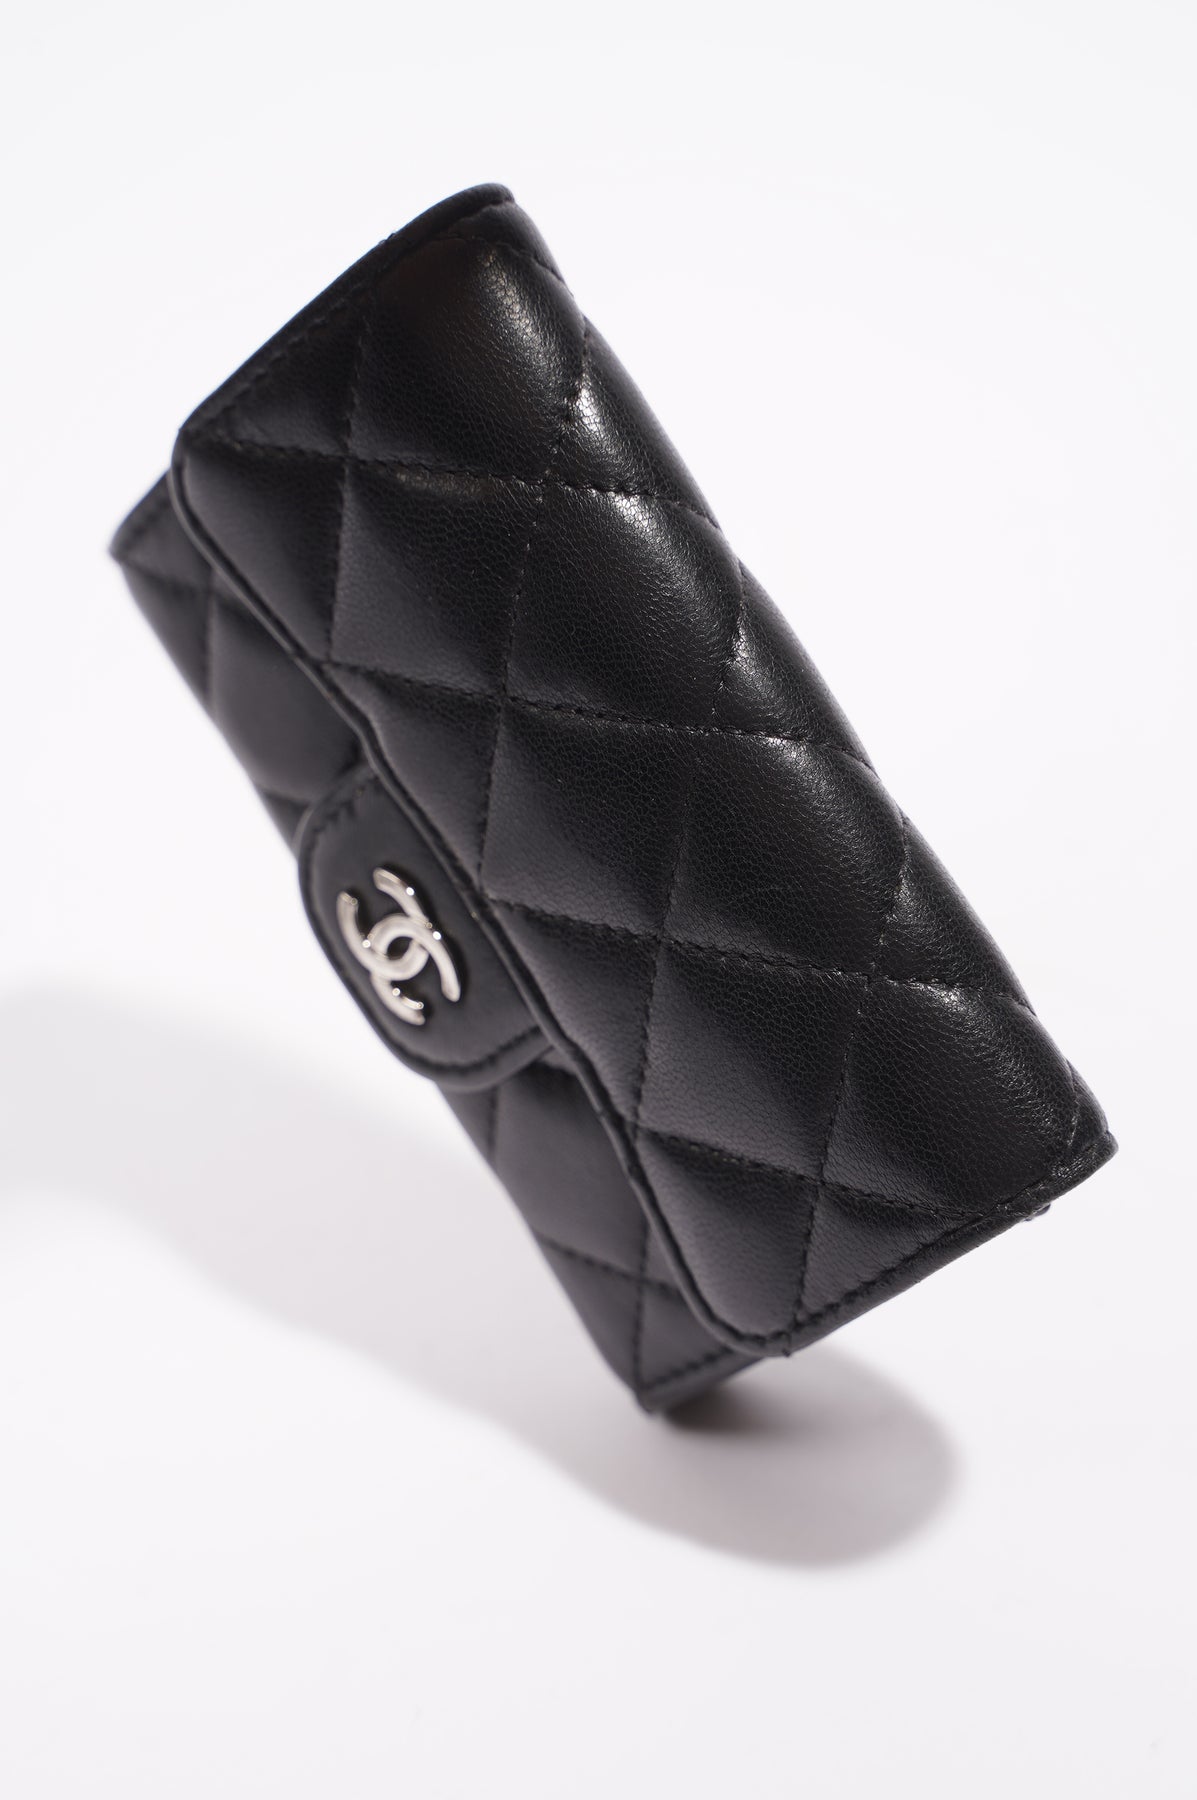 Chanel Classic Flap Bag 25cm Lambskin Gold-Tone Black, Black, One Size